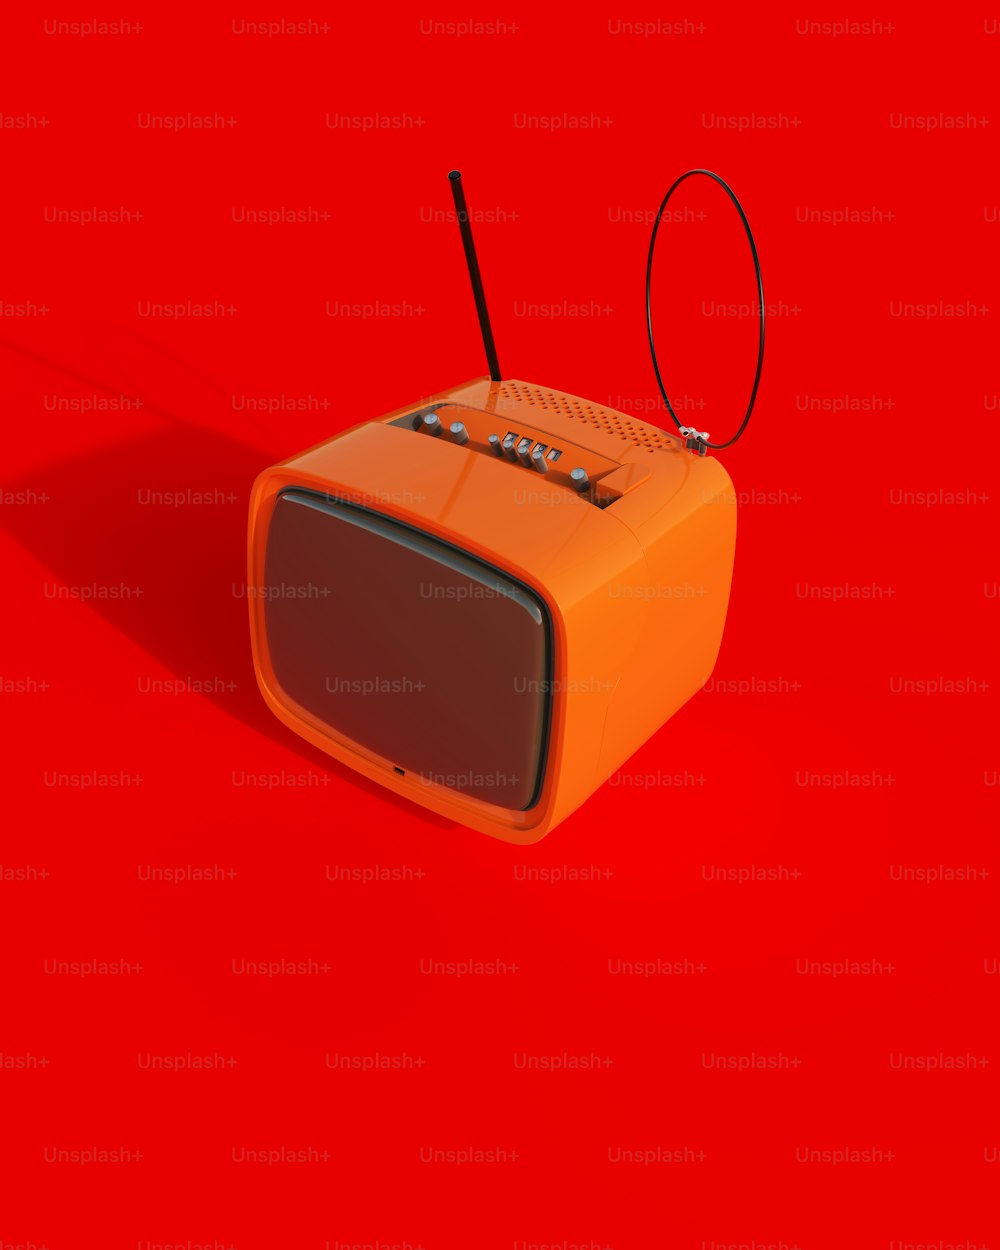 Una radio naranja sobre una superficie roja